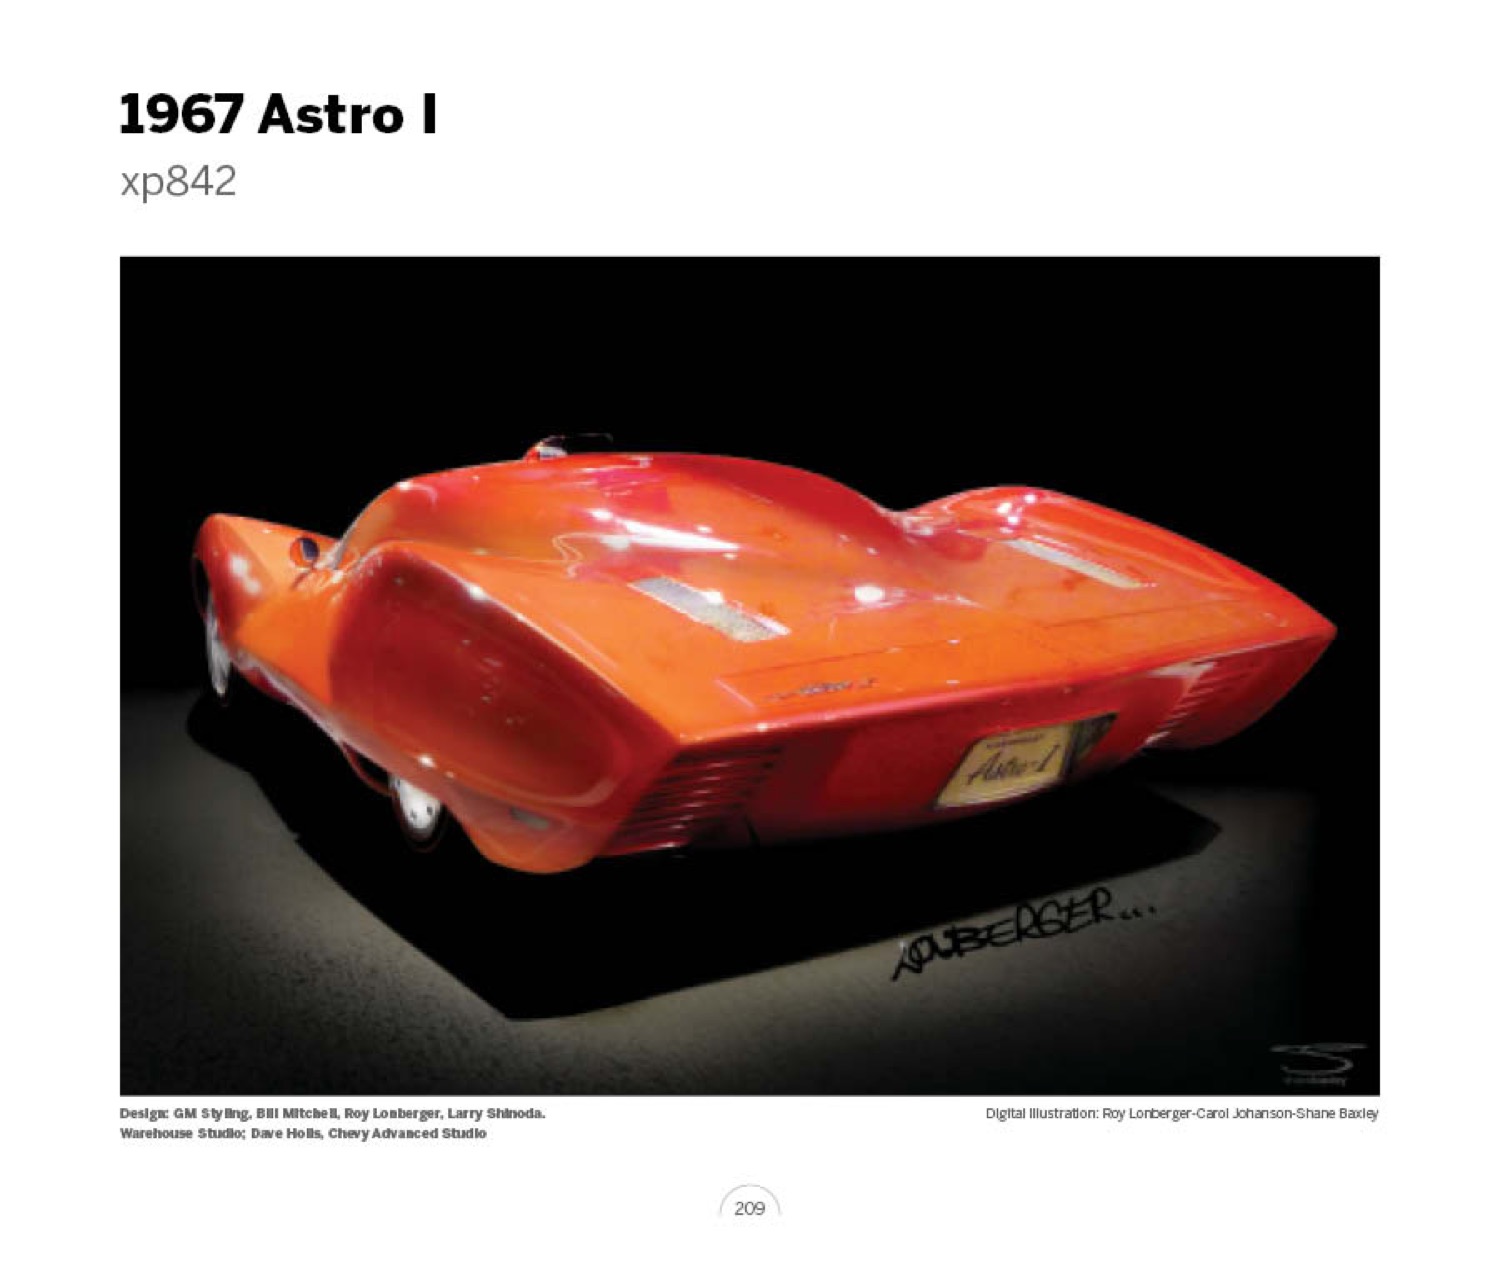 (33) 1967 Astro I xp842 LoRez.jpg